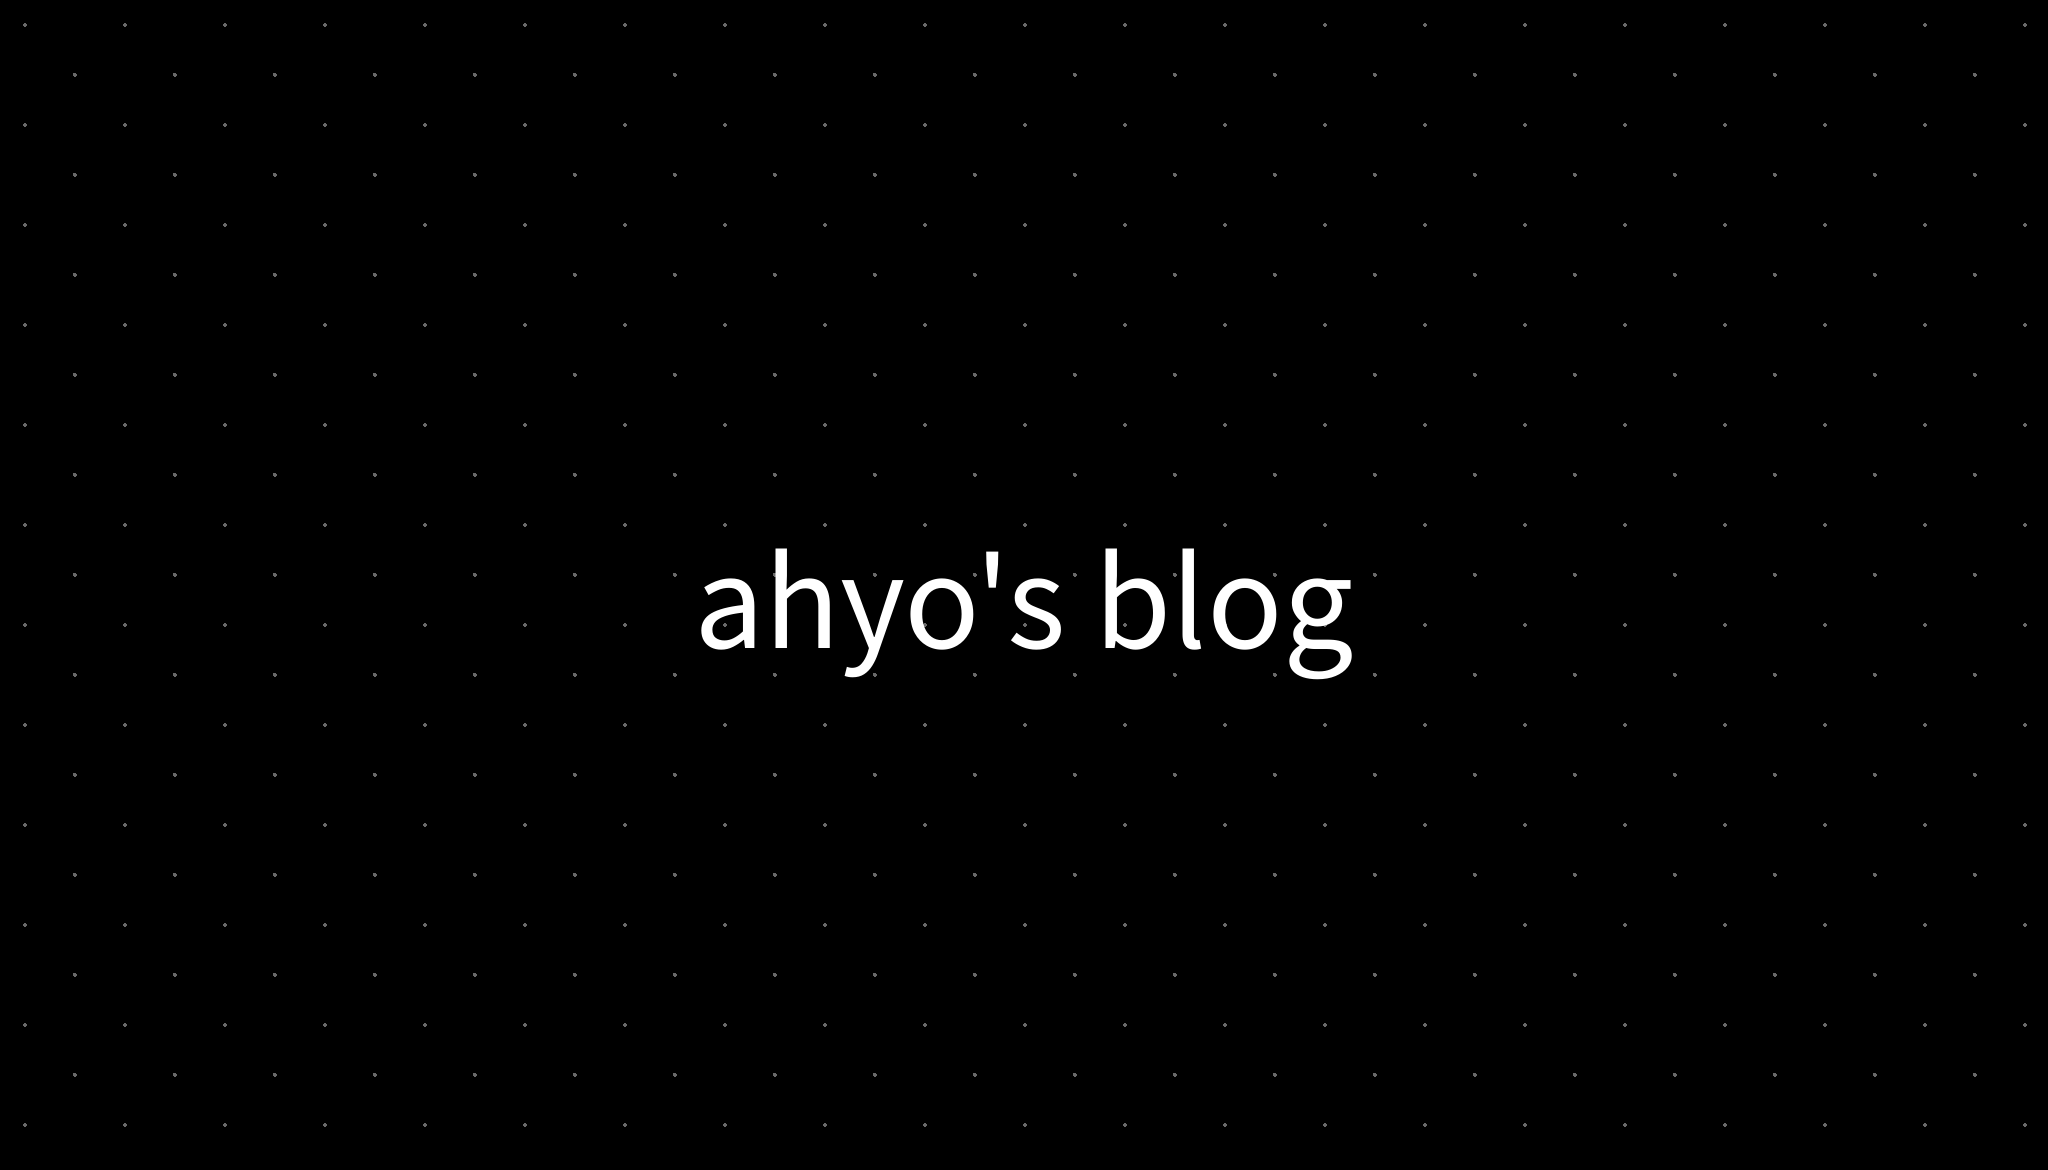 ahyo's blog